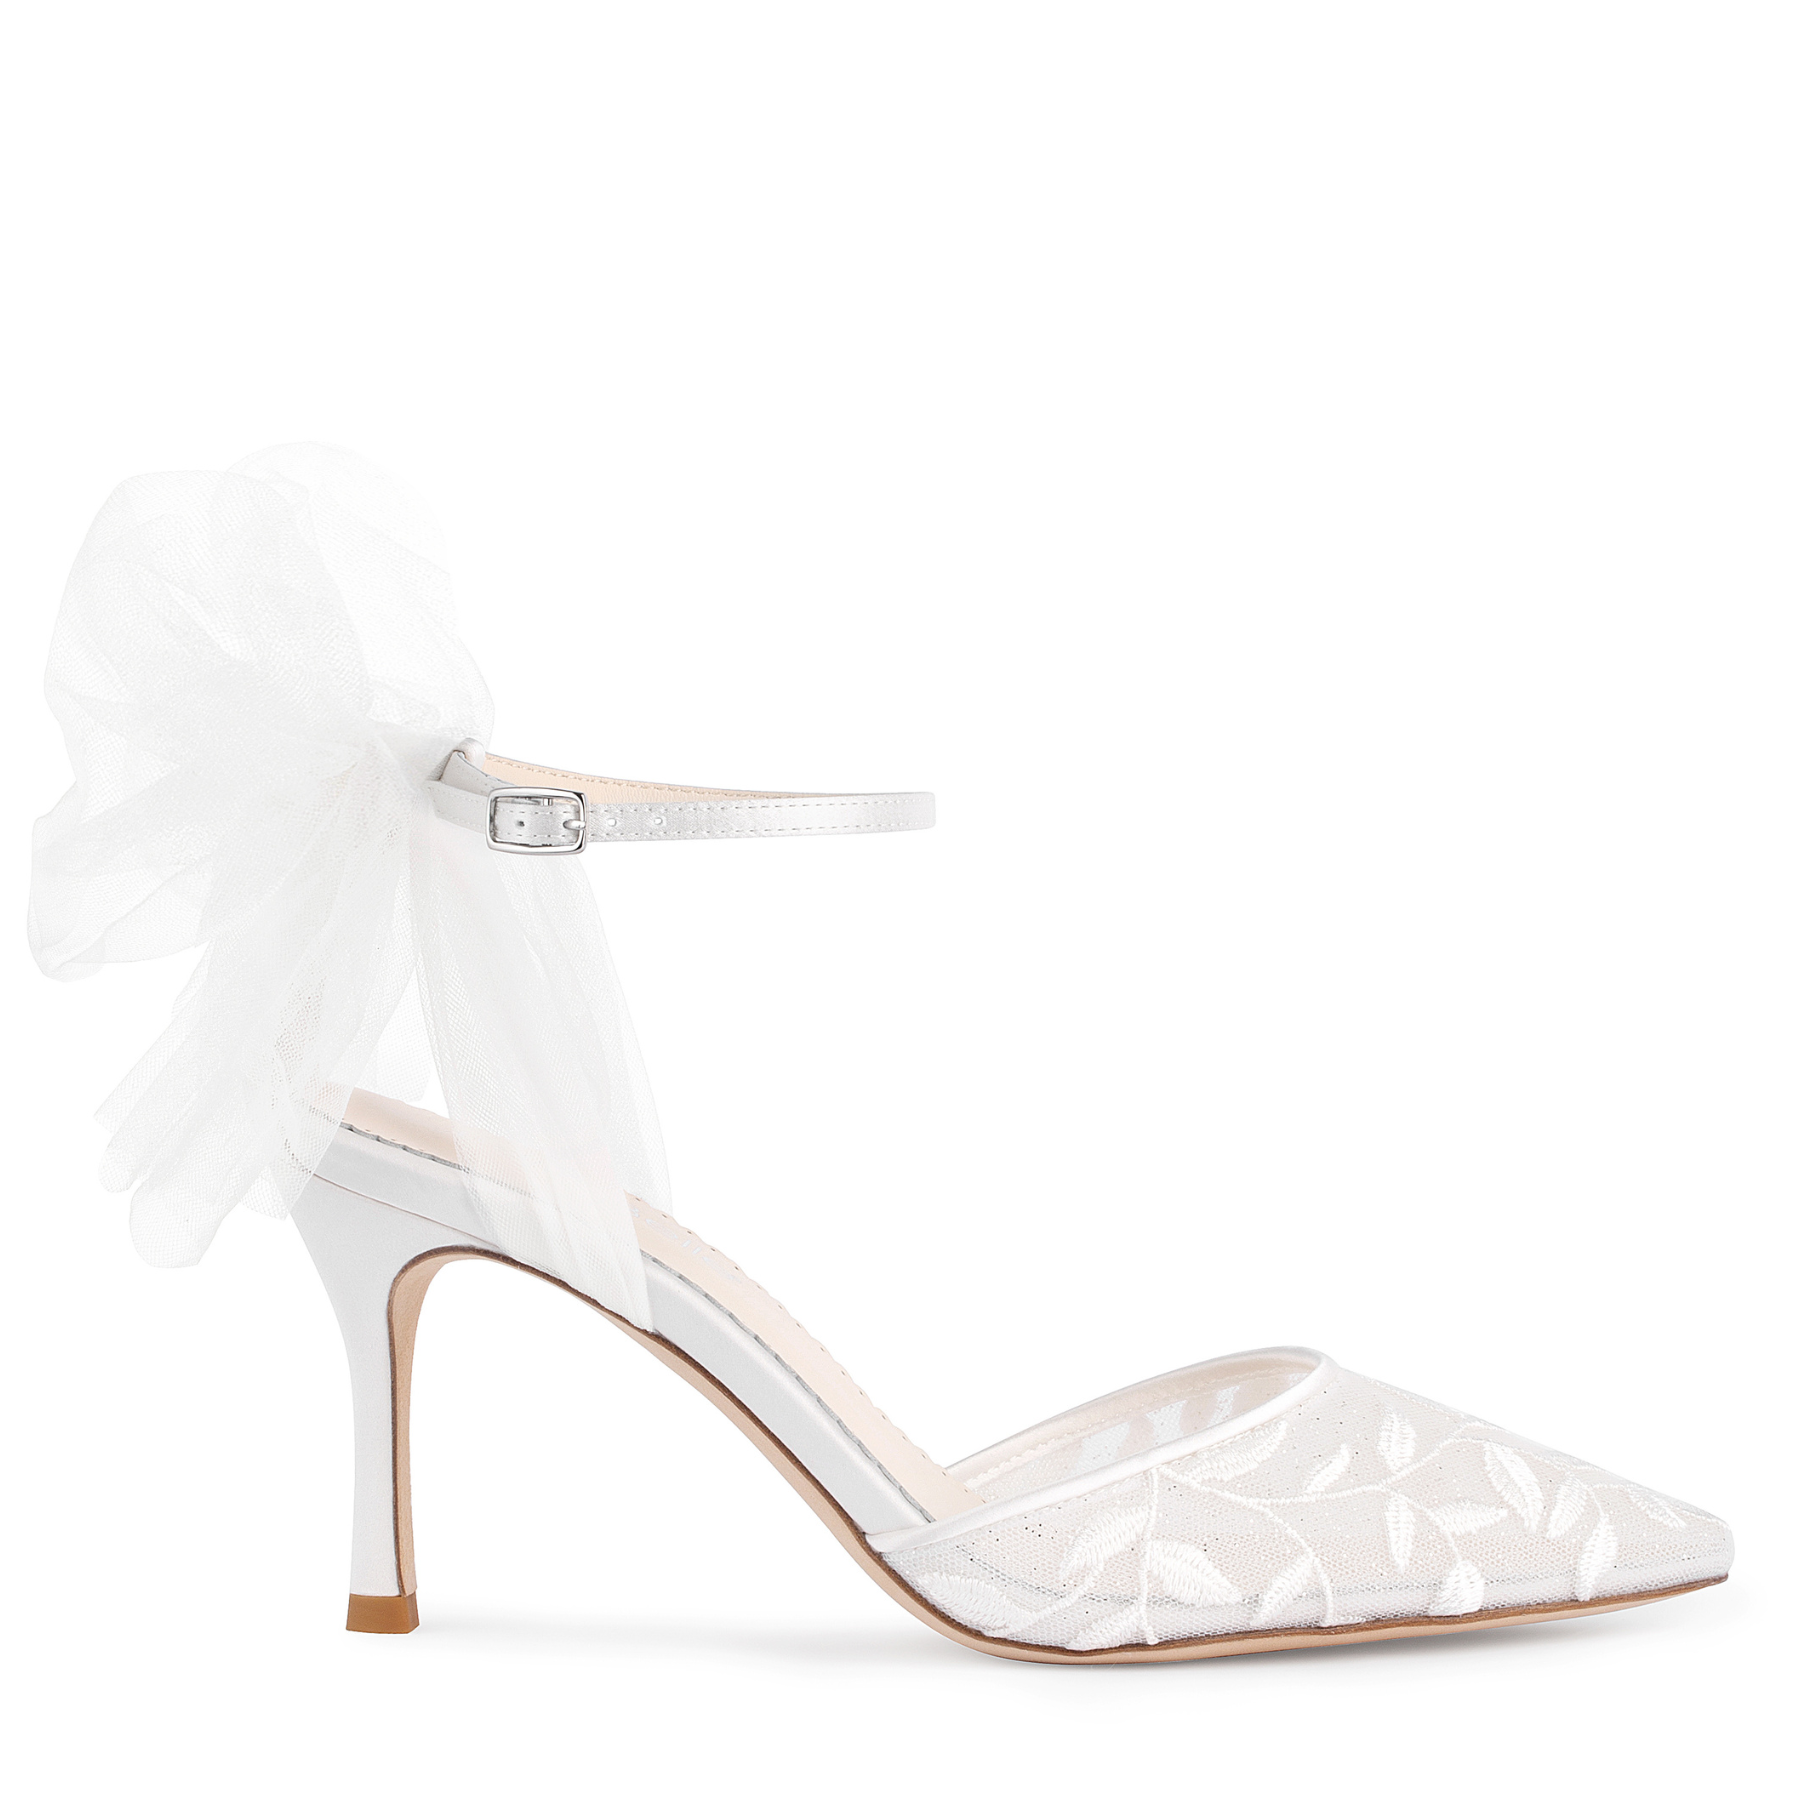 Brianna - Ivory Satin Low Heel Wedding Shoes | Georgies Bridal Shoes